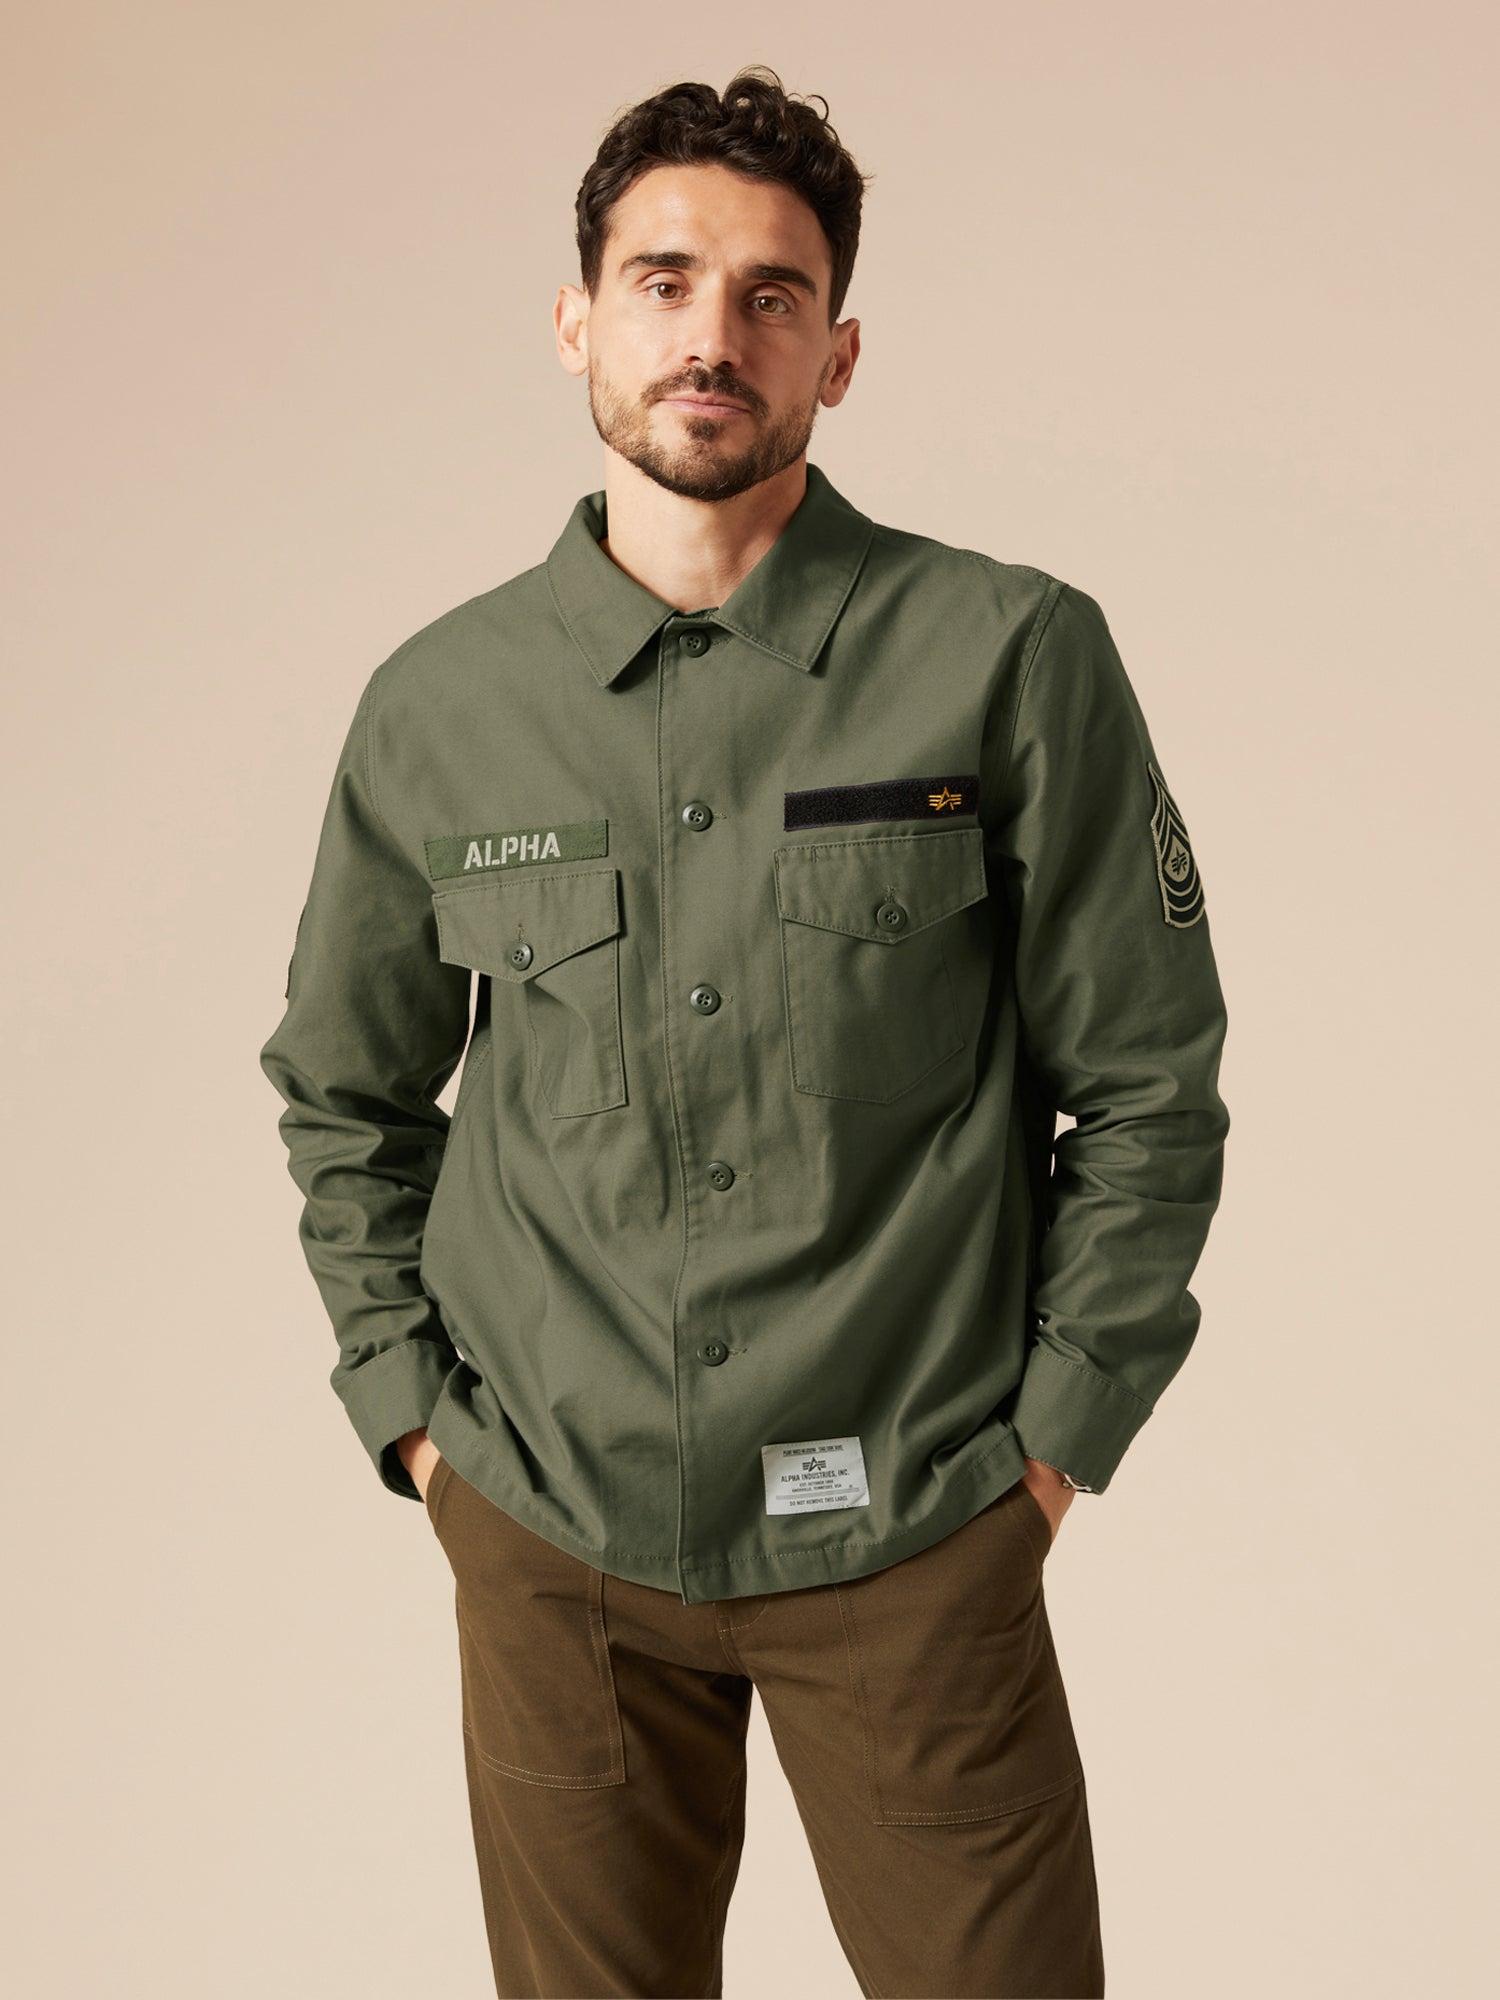 Alpha Industries Deco Fatigue Green Lyst Men for Shirt in Jacket 